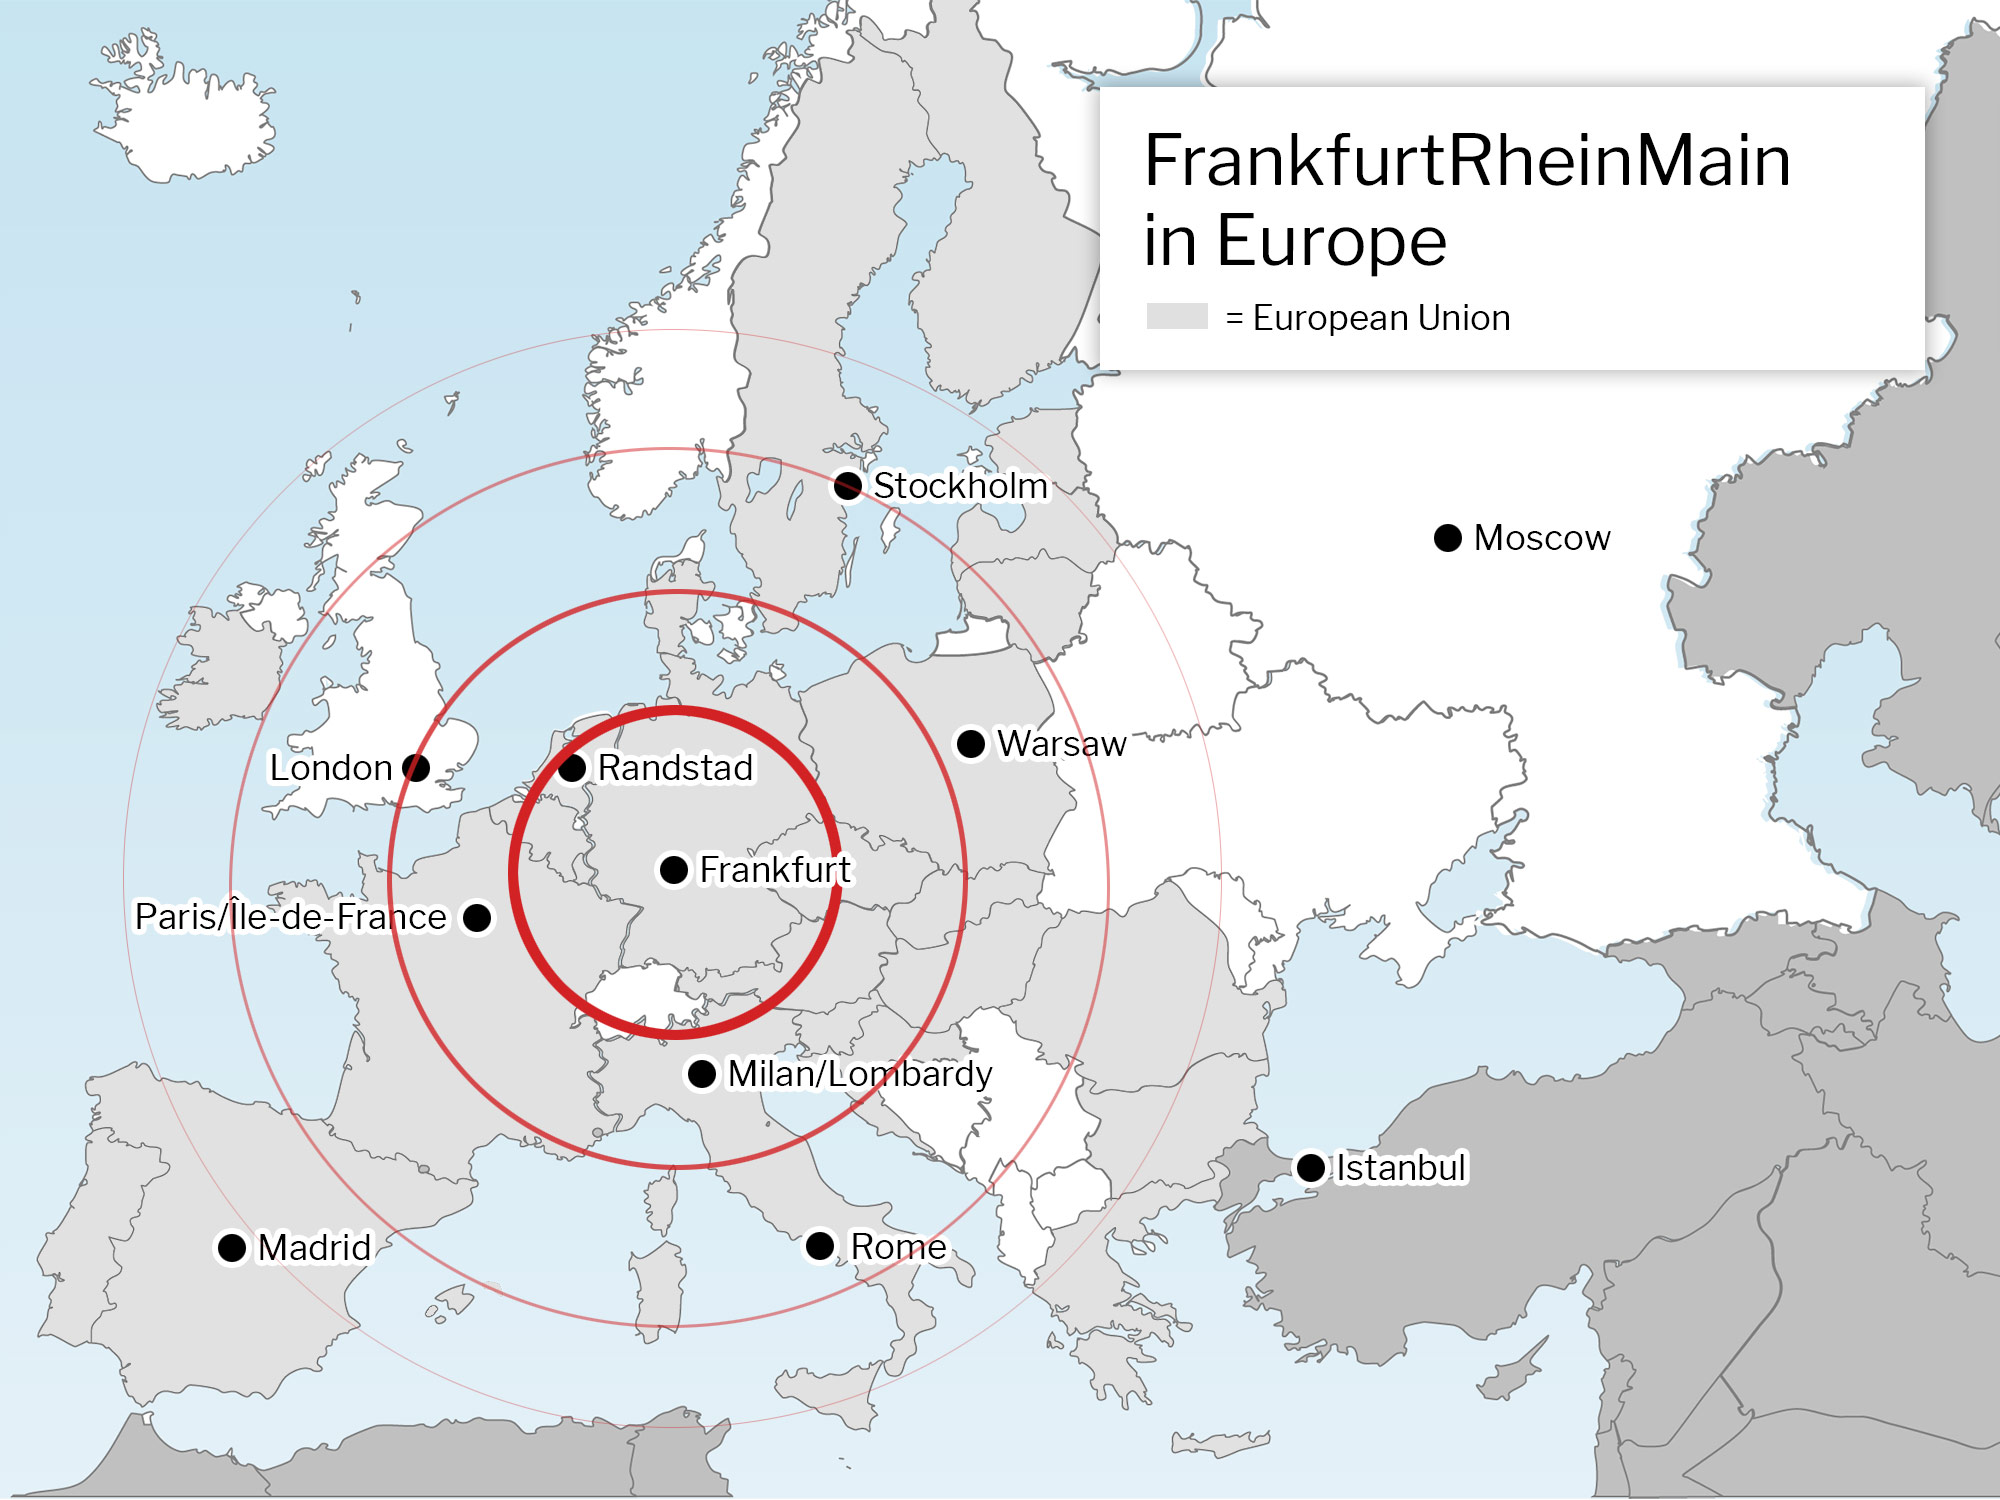 FrankfurtRheinMain in Europe - Greater Frankfurt Area - Brexit benefits - Perfect location in Europe